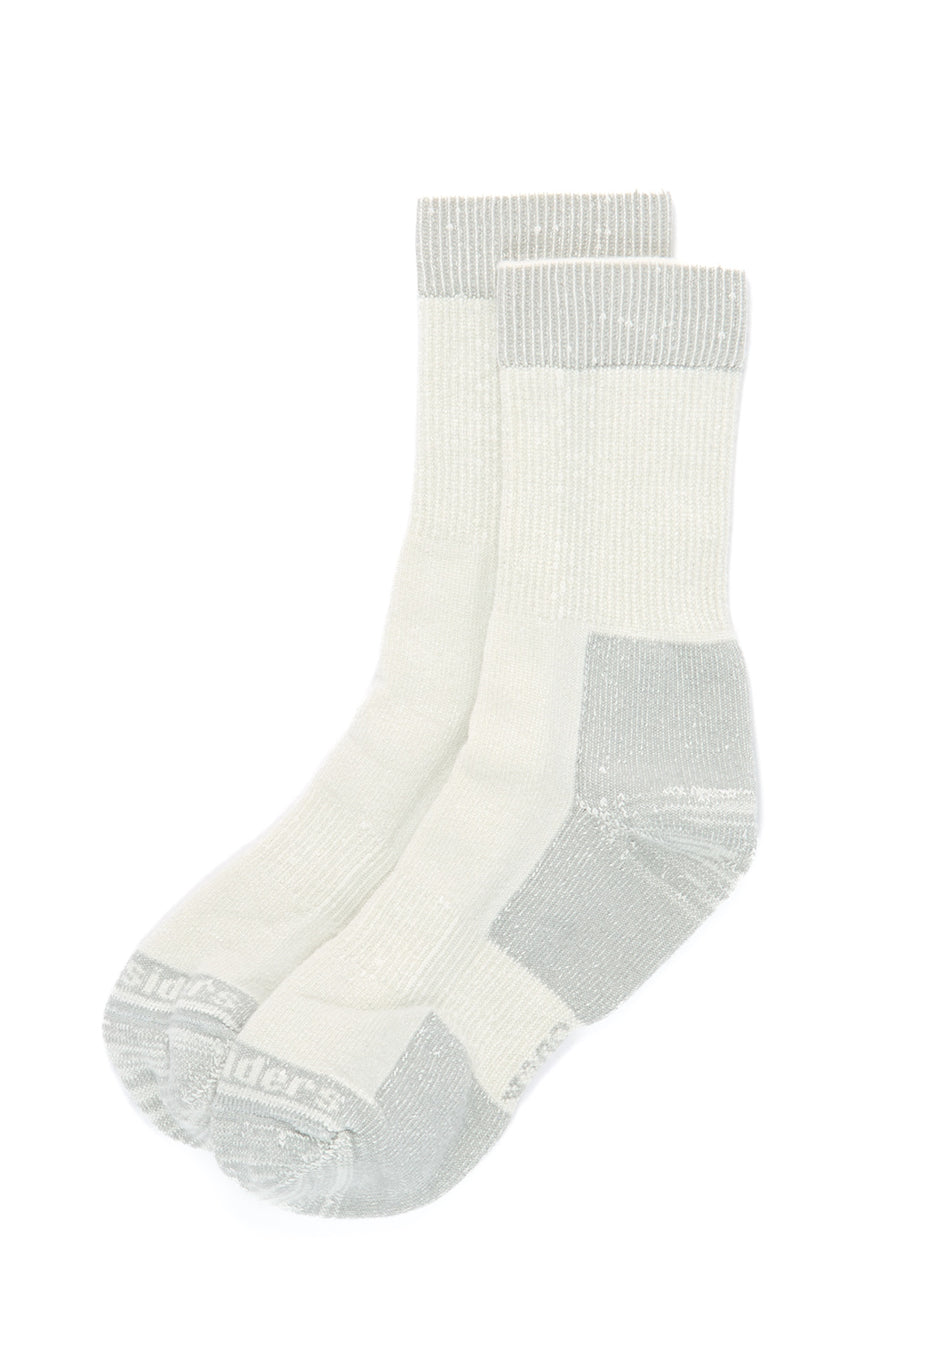 Outsiders Everyday Hiker Socks - Grey